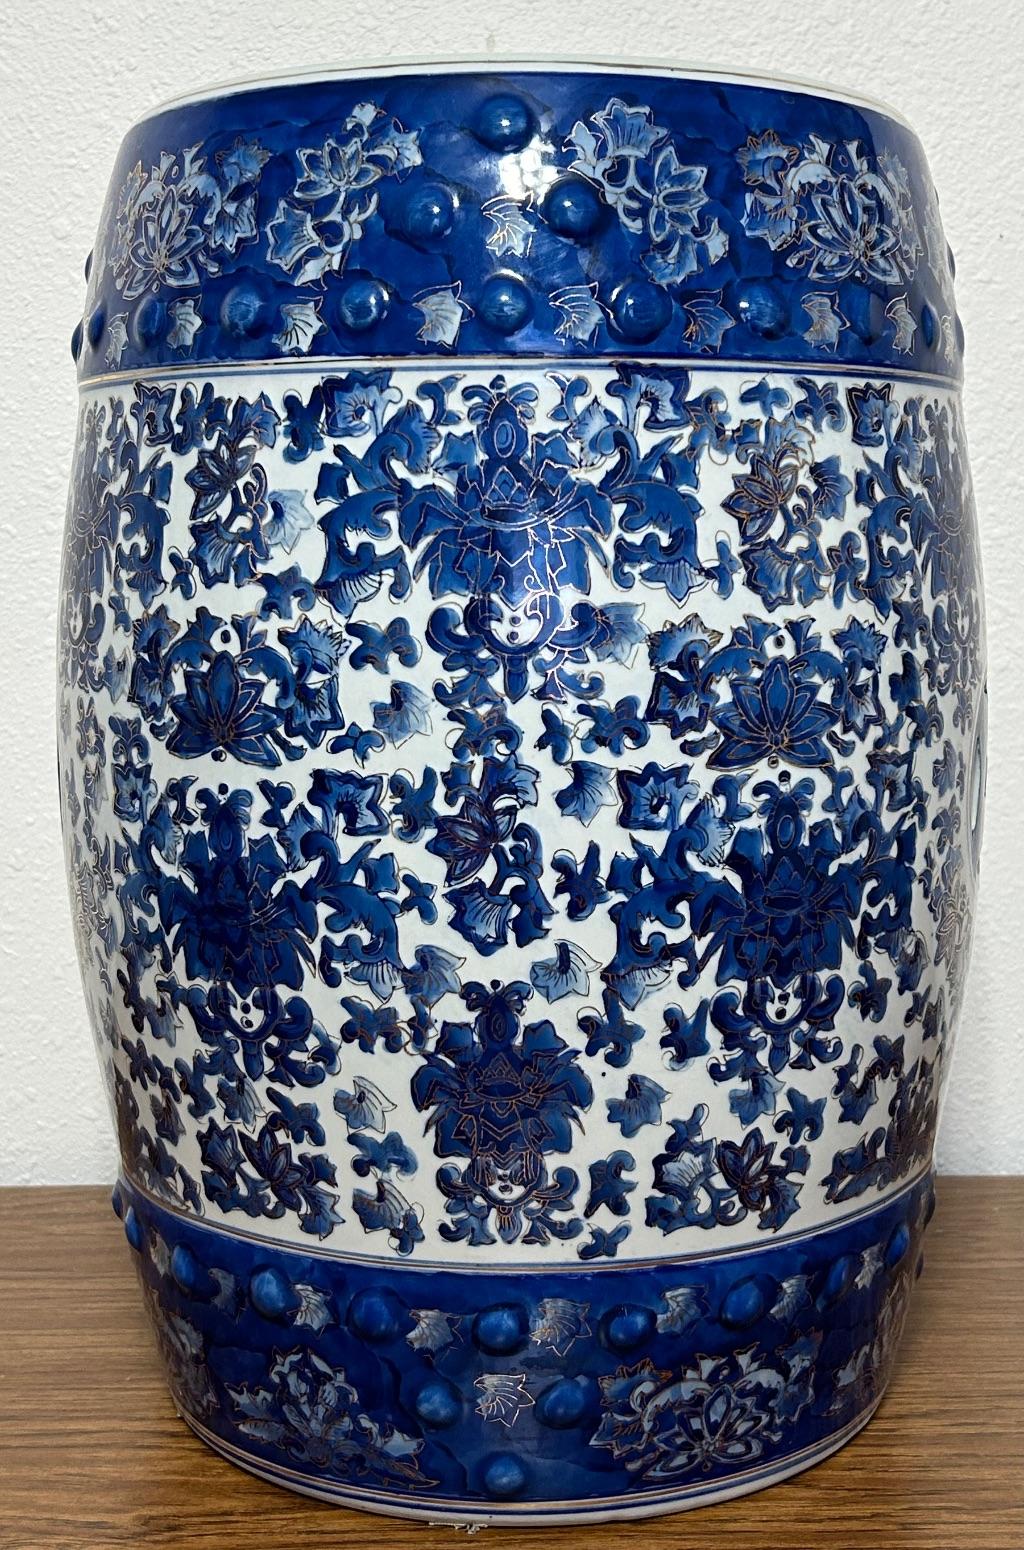 Porcelain Barrel from Singapore